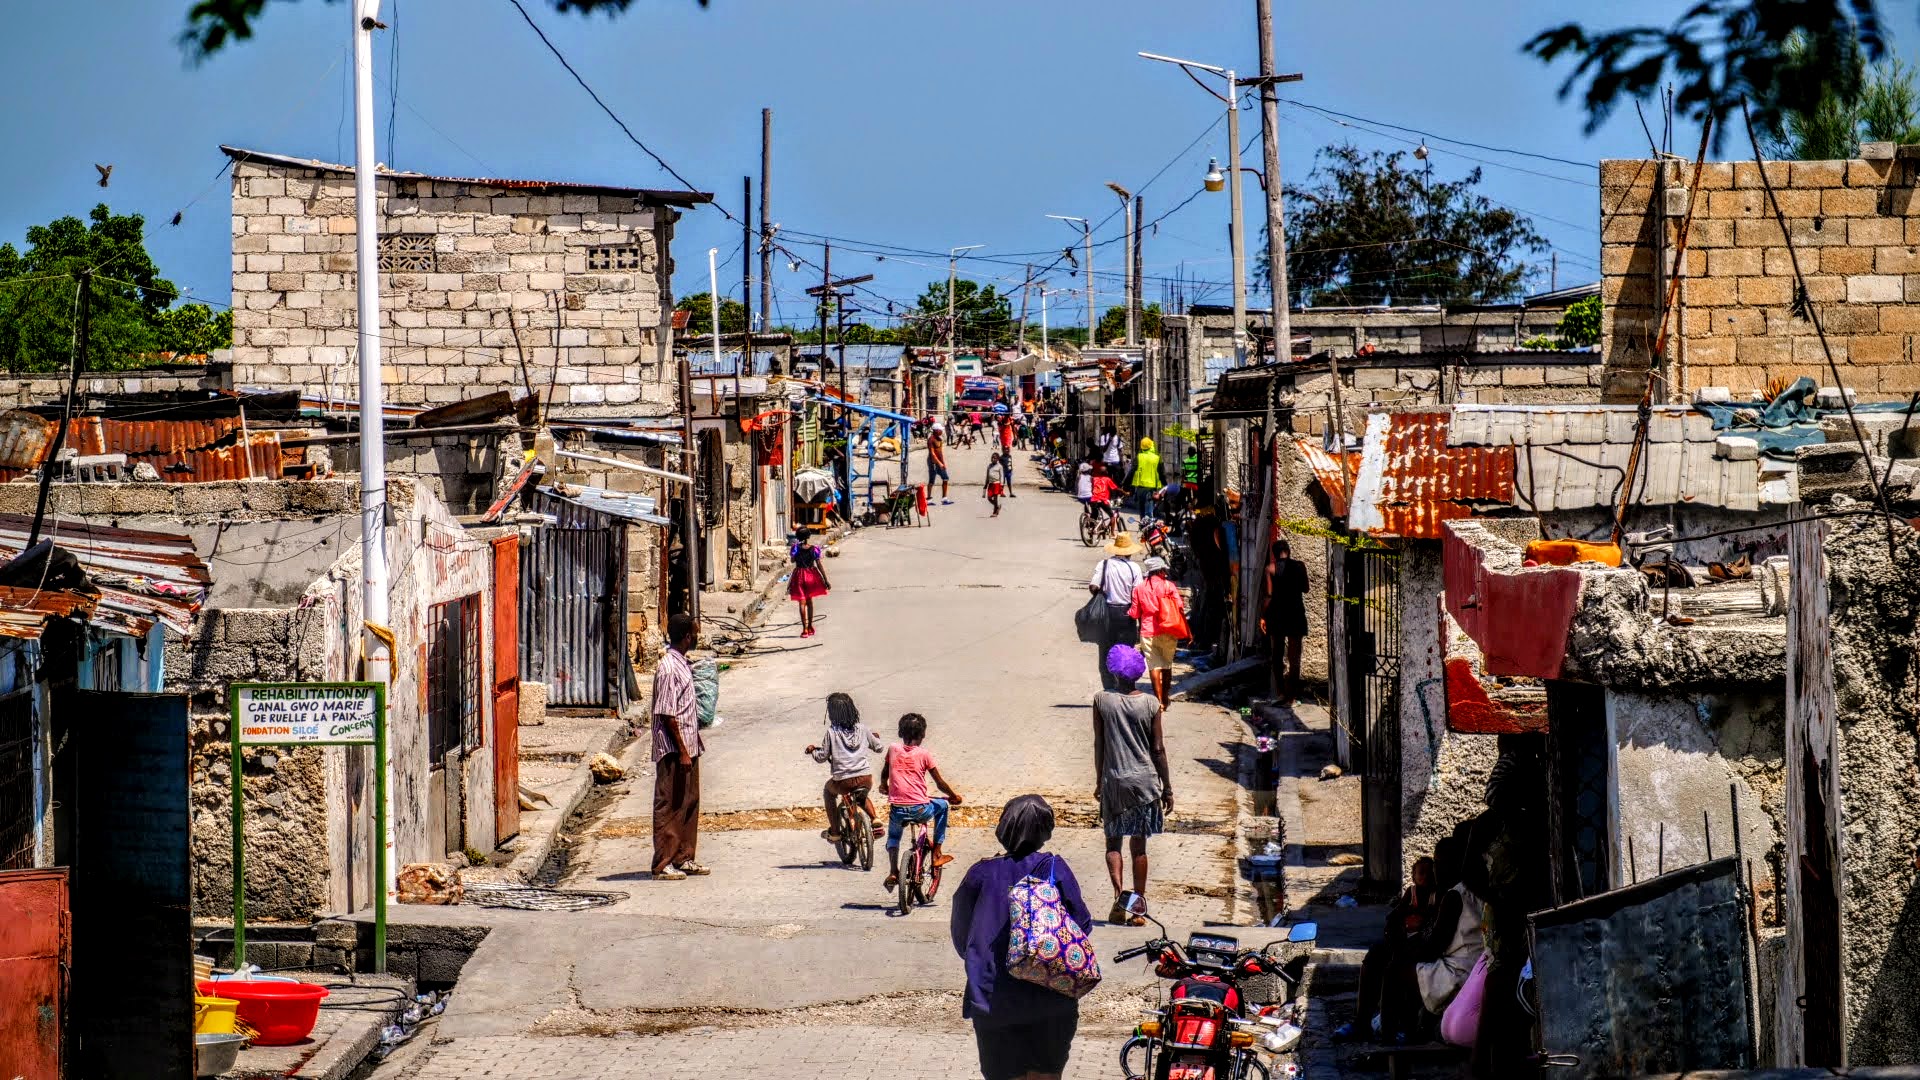 A street scene in Port-au-Prince, Haiti